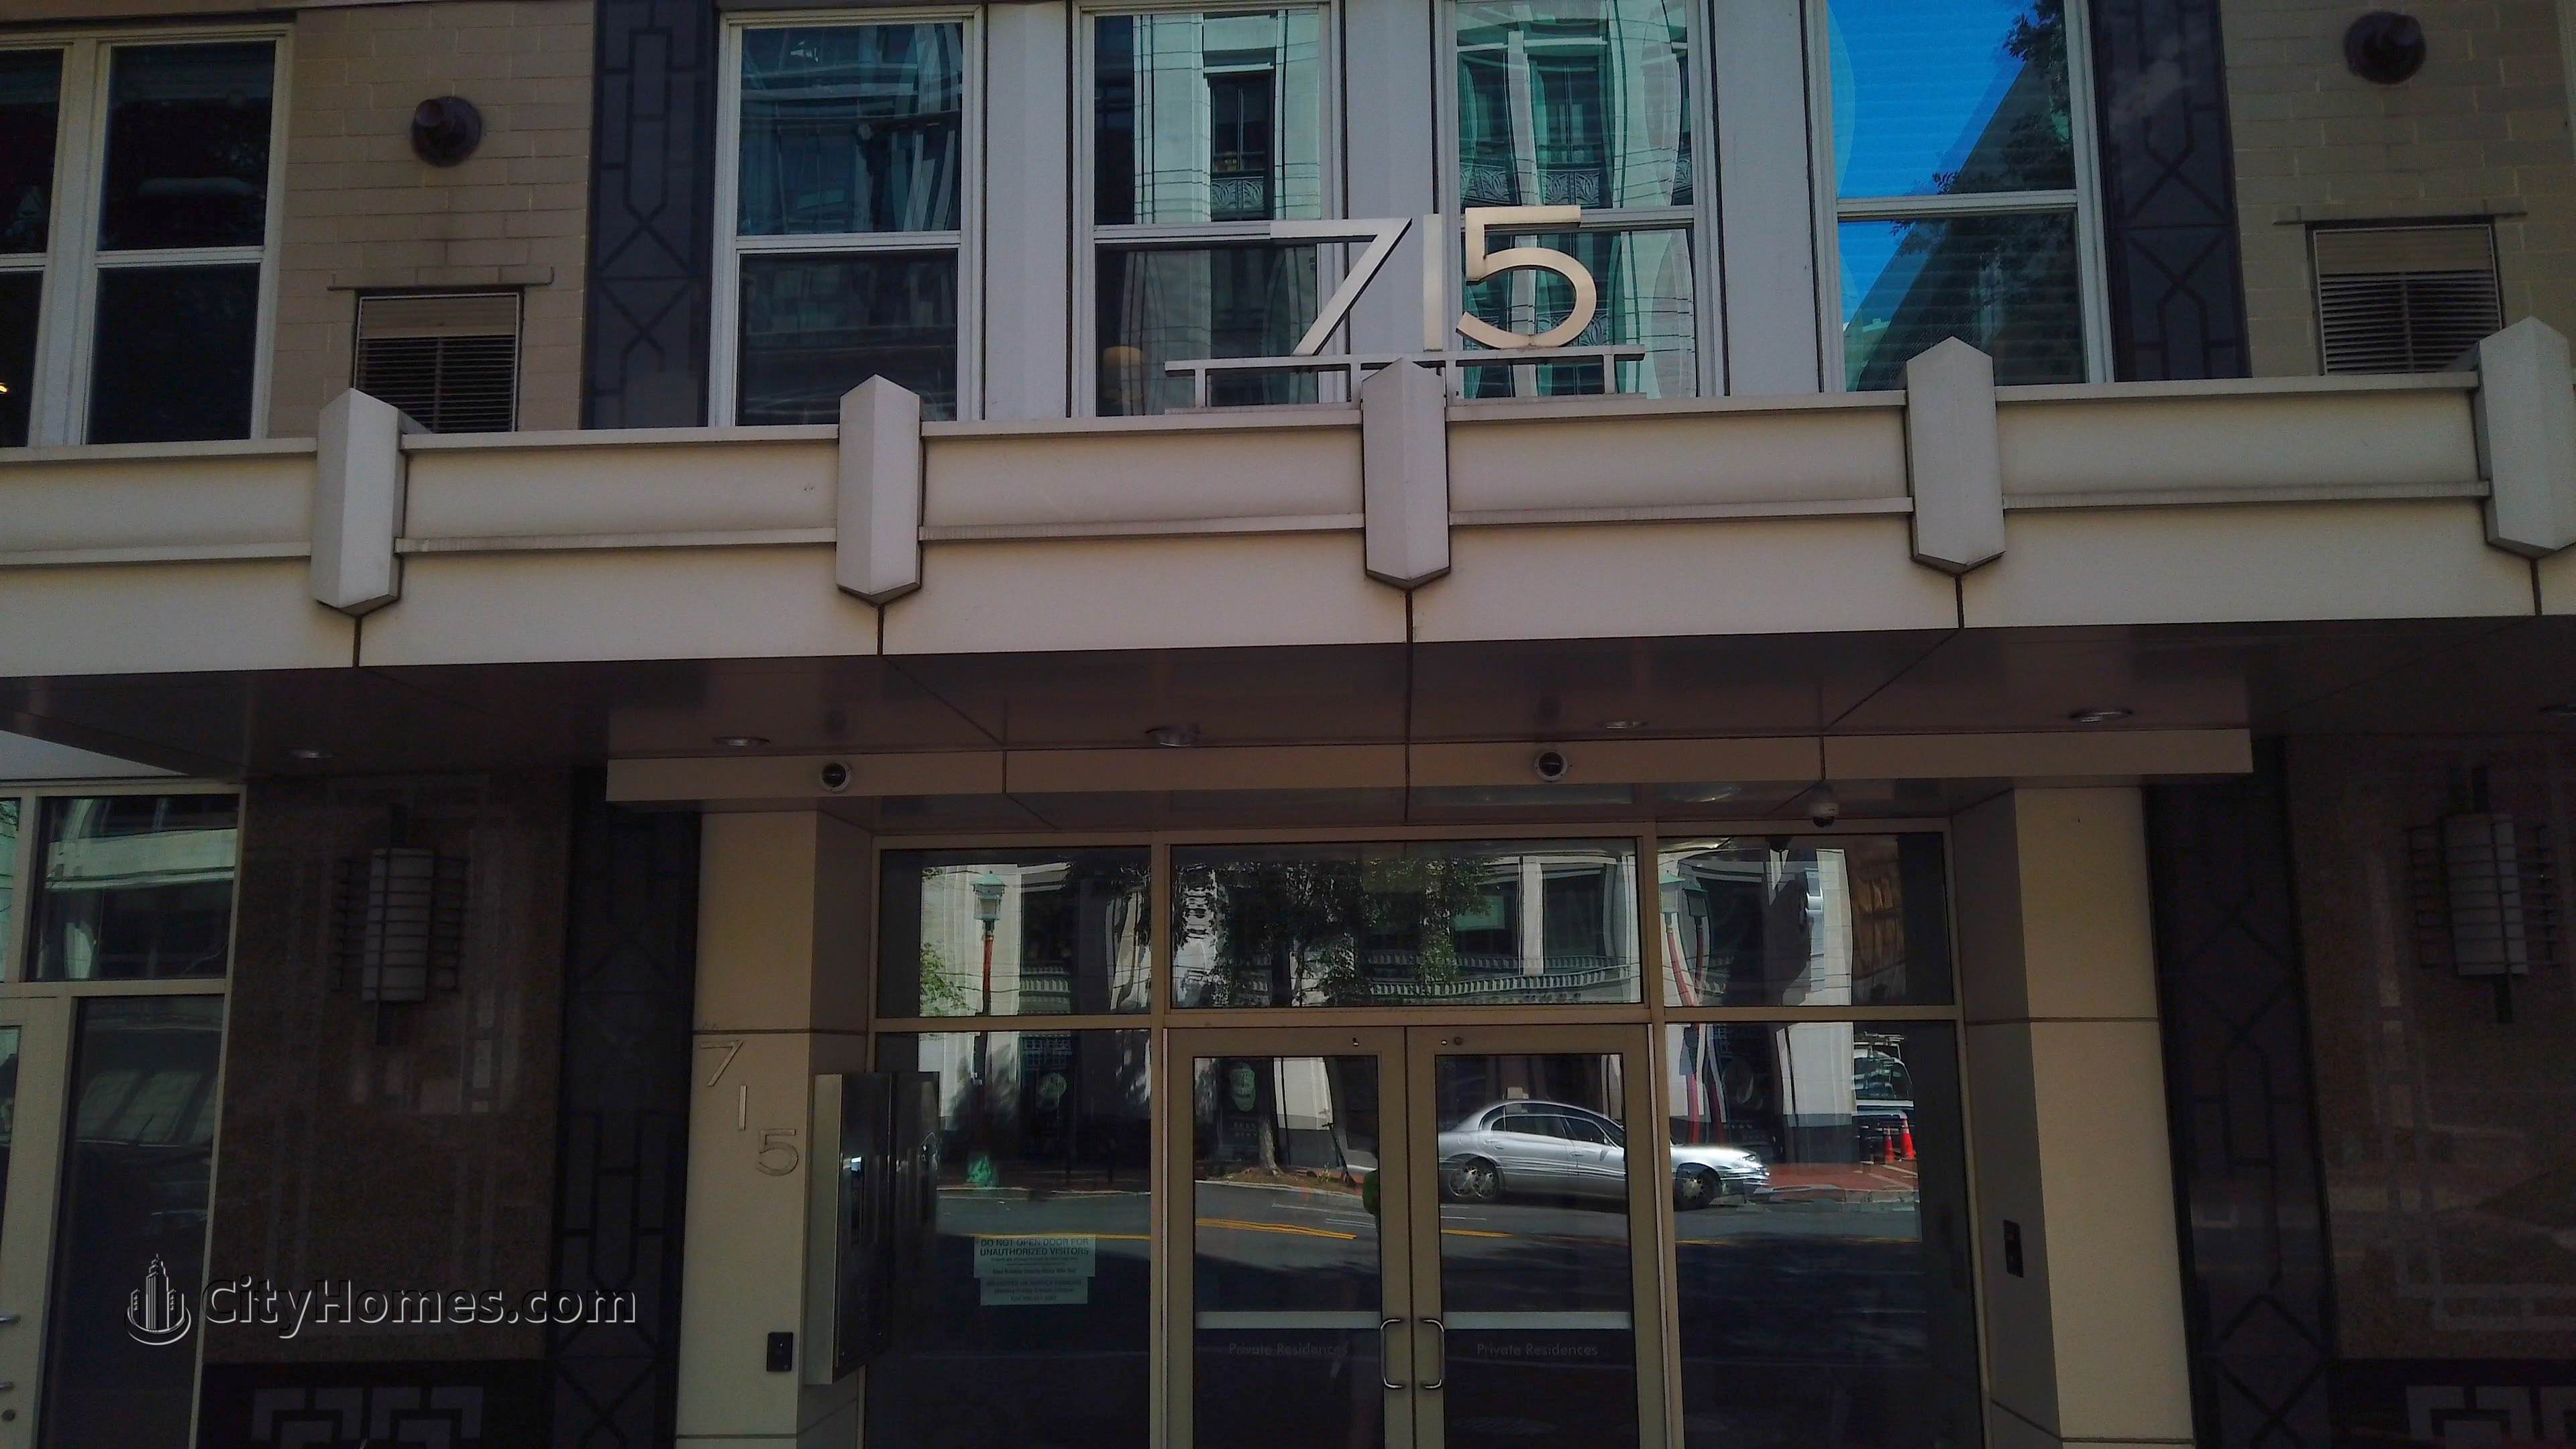 The Cosmopolitan κτίριο σε 715 6th St NW, Chinatown, Washington, DC 20001